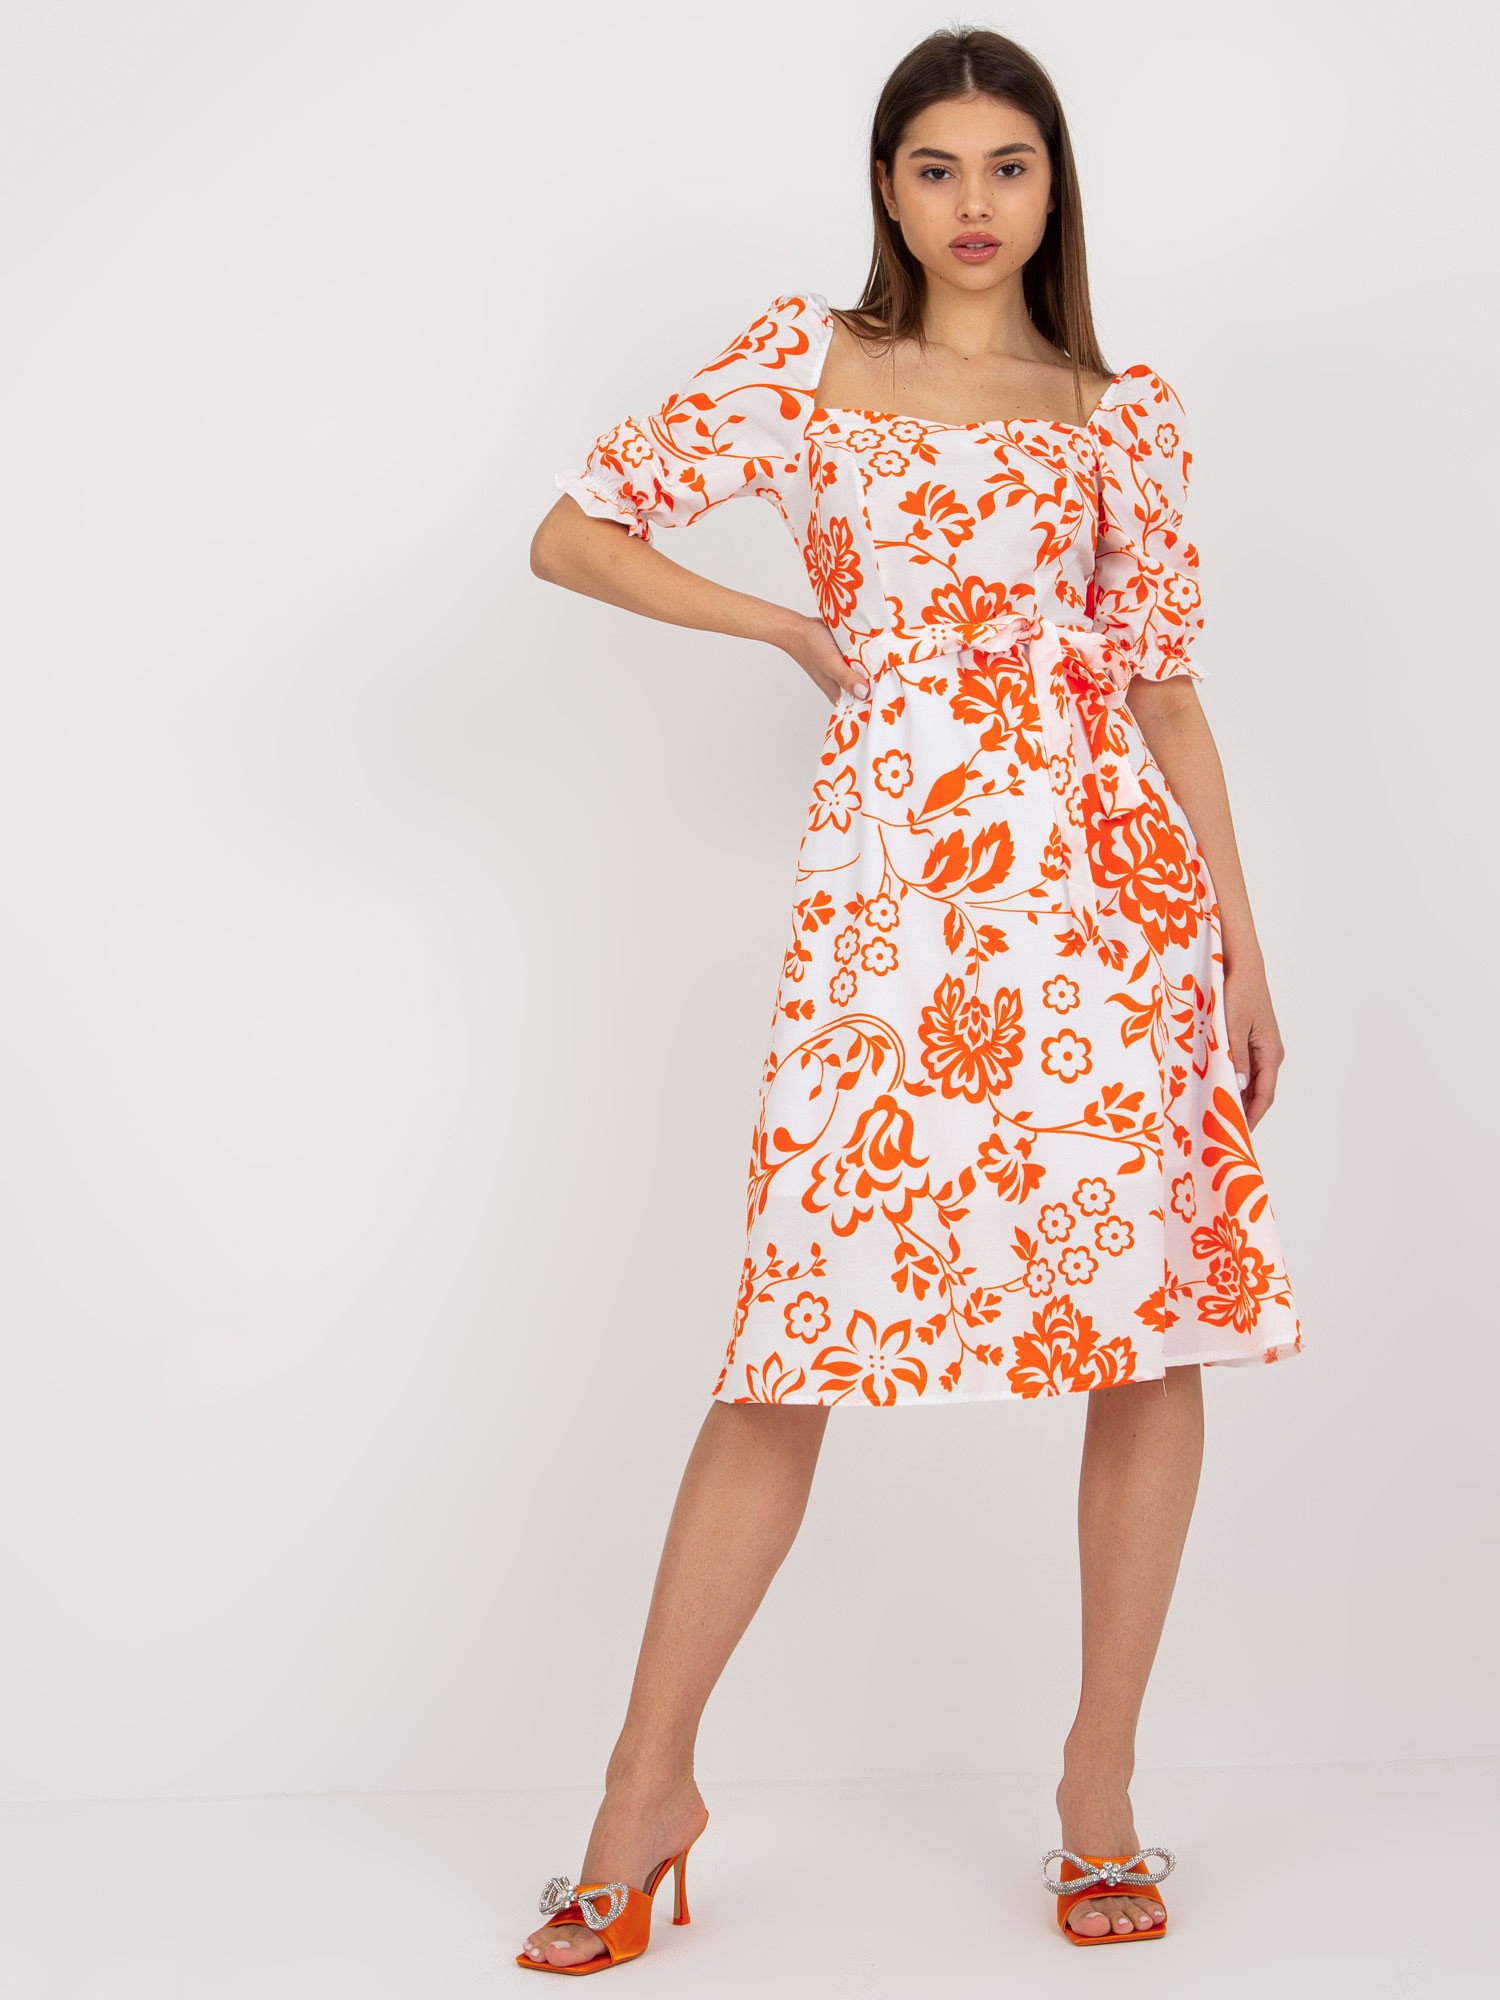 Midi dress with white and orange pattern